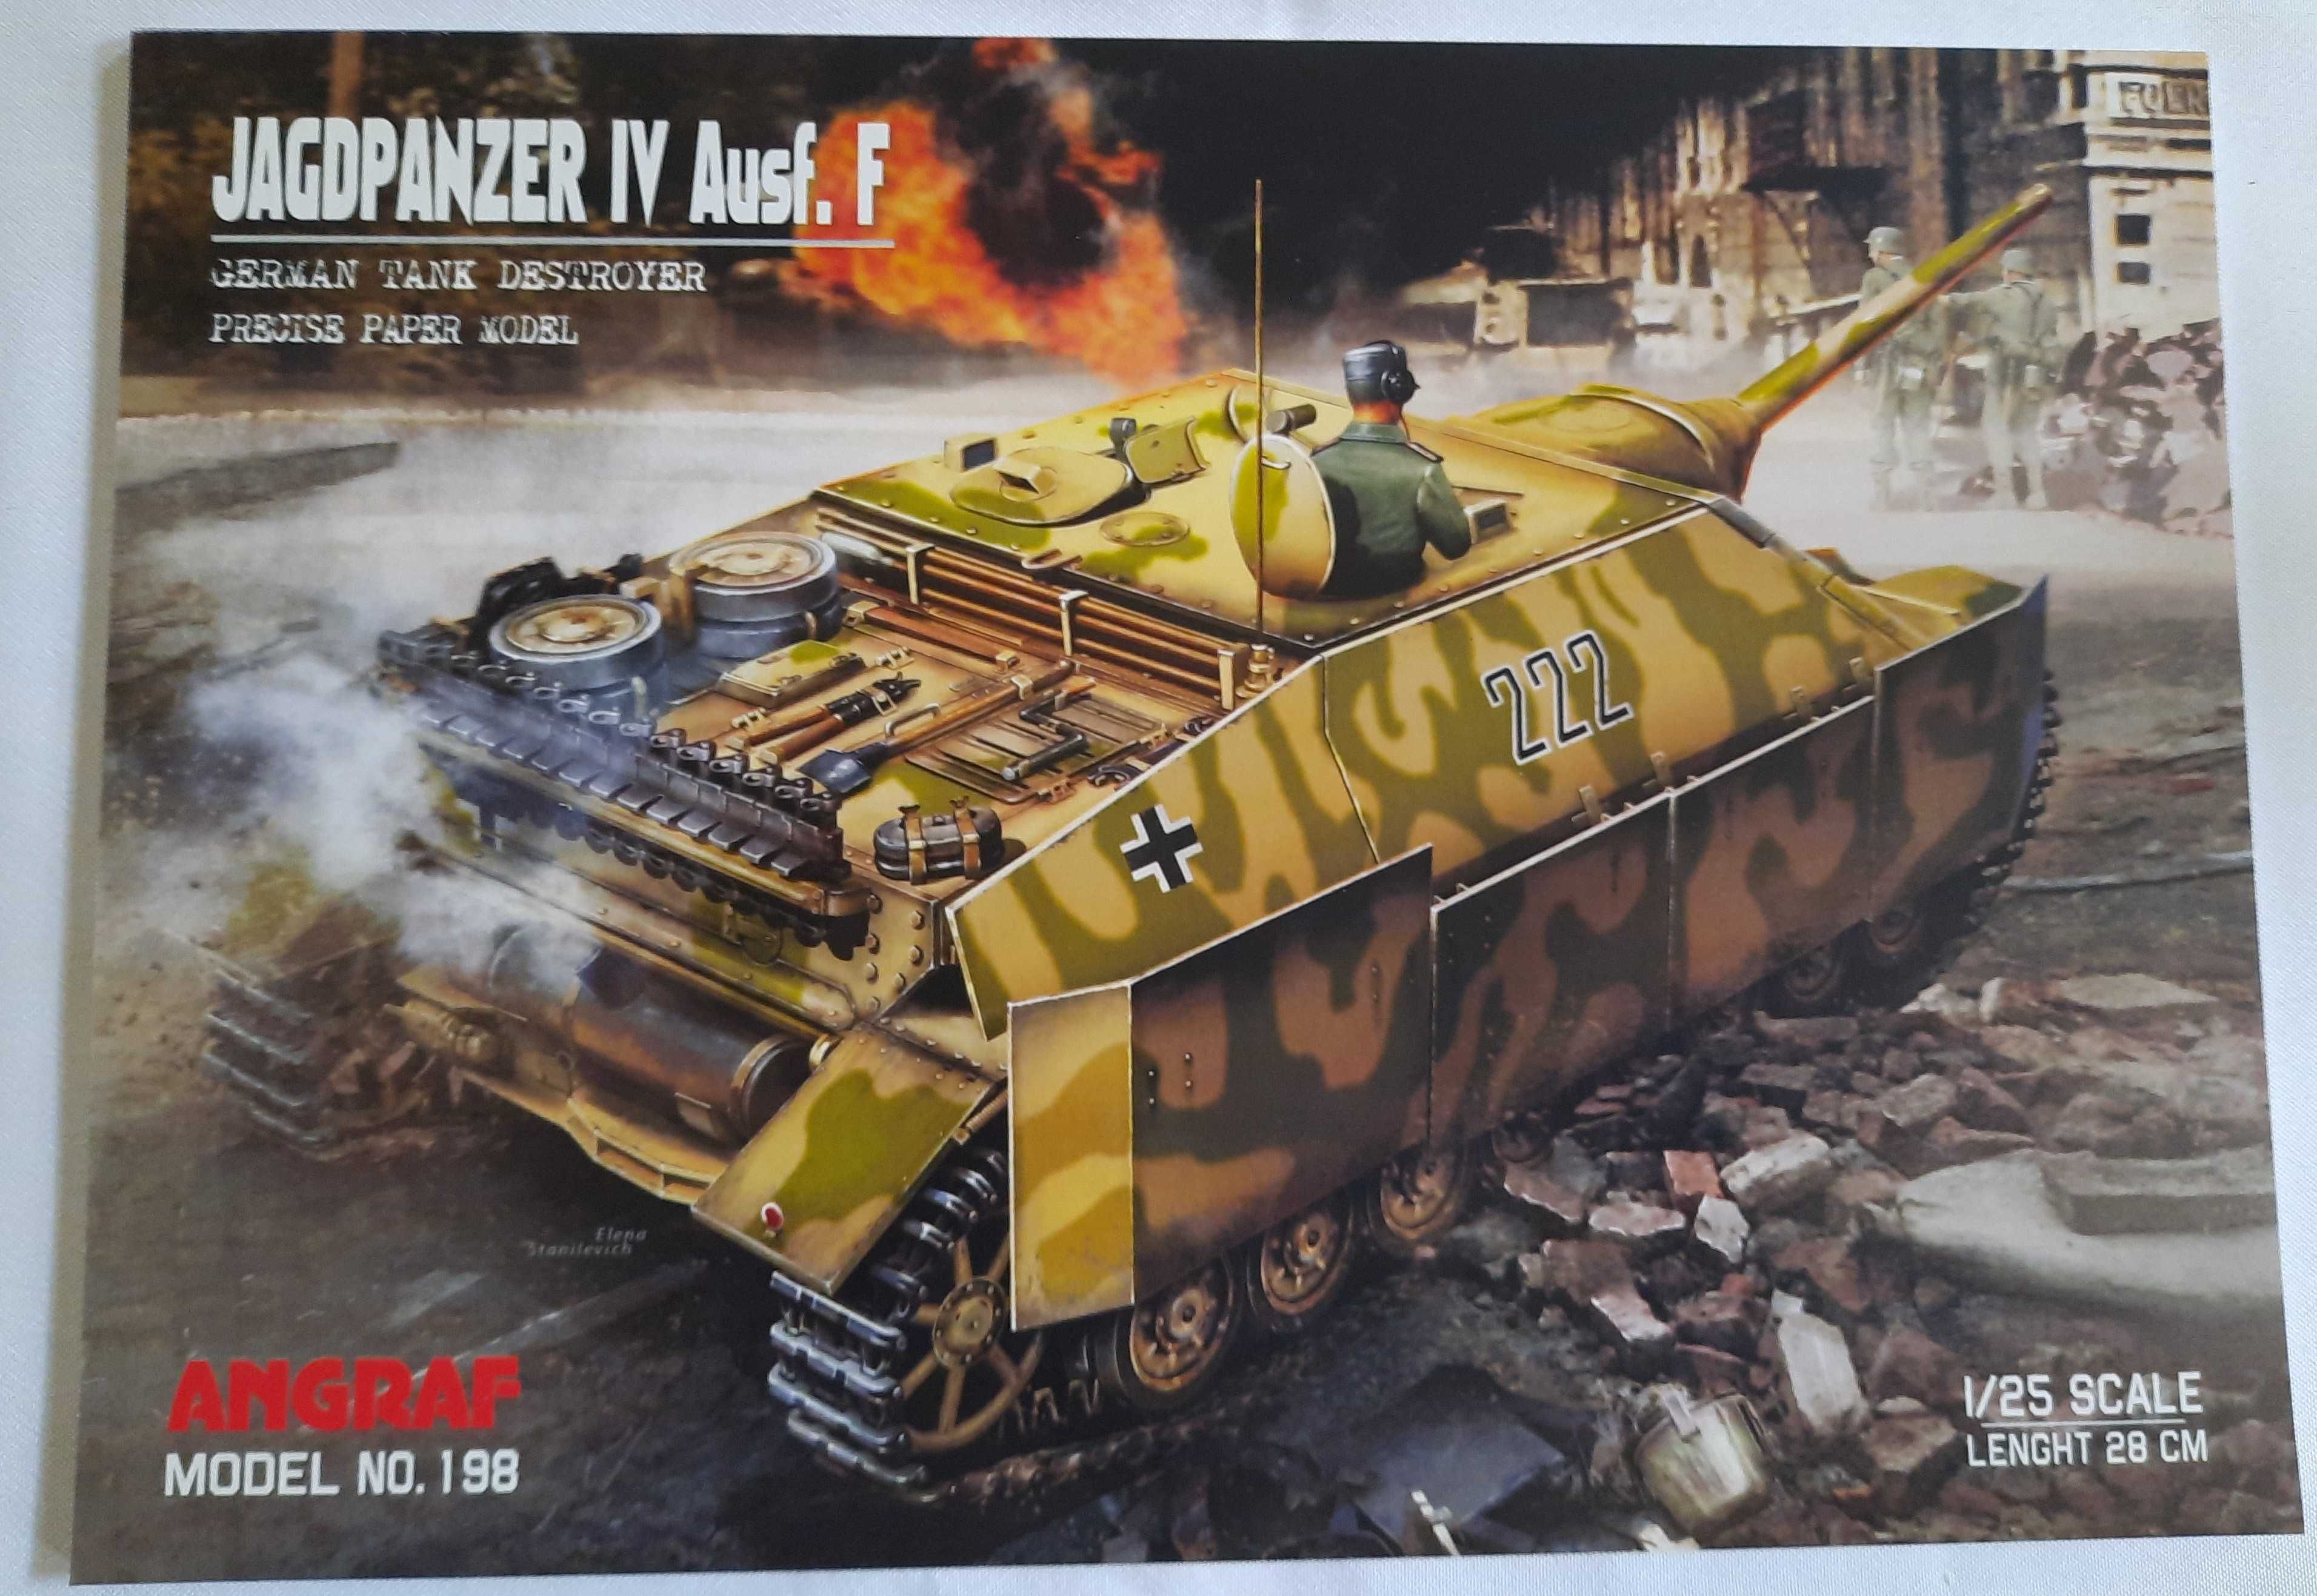 Model kartonowy Angraf czołg Jagdpanzer IV Ausf. F offset